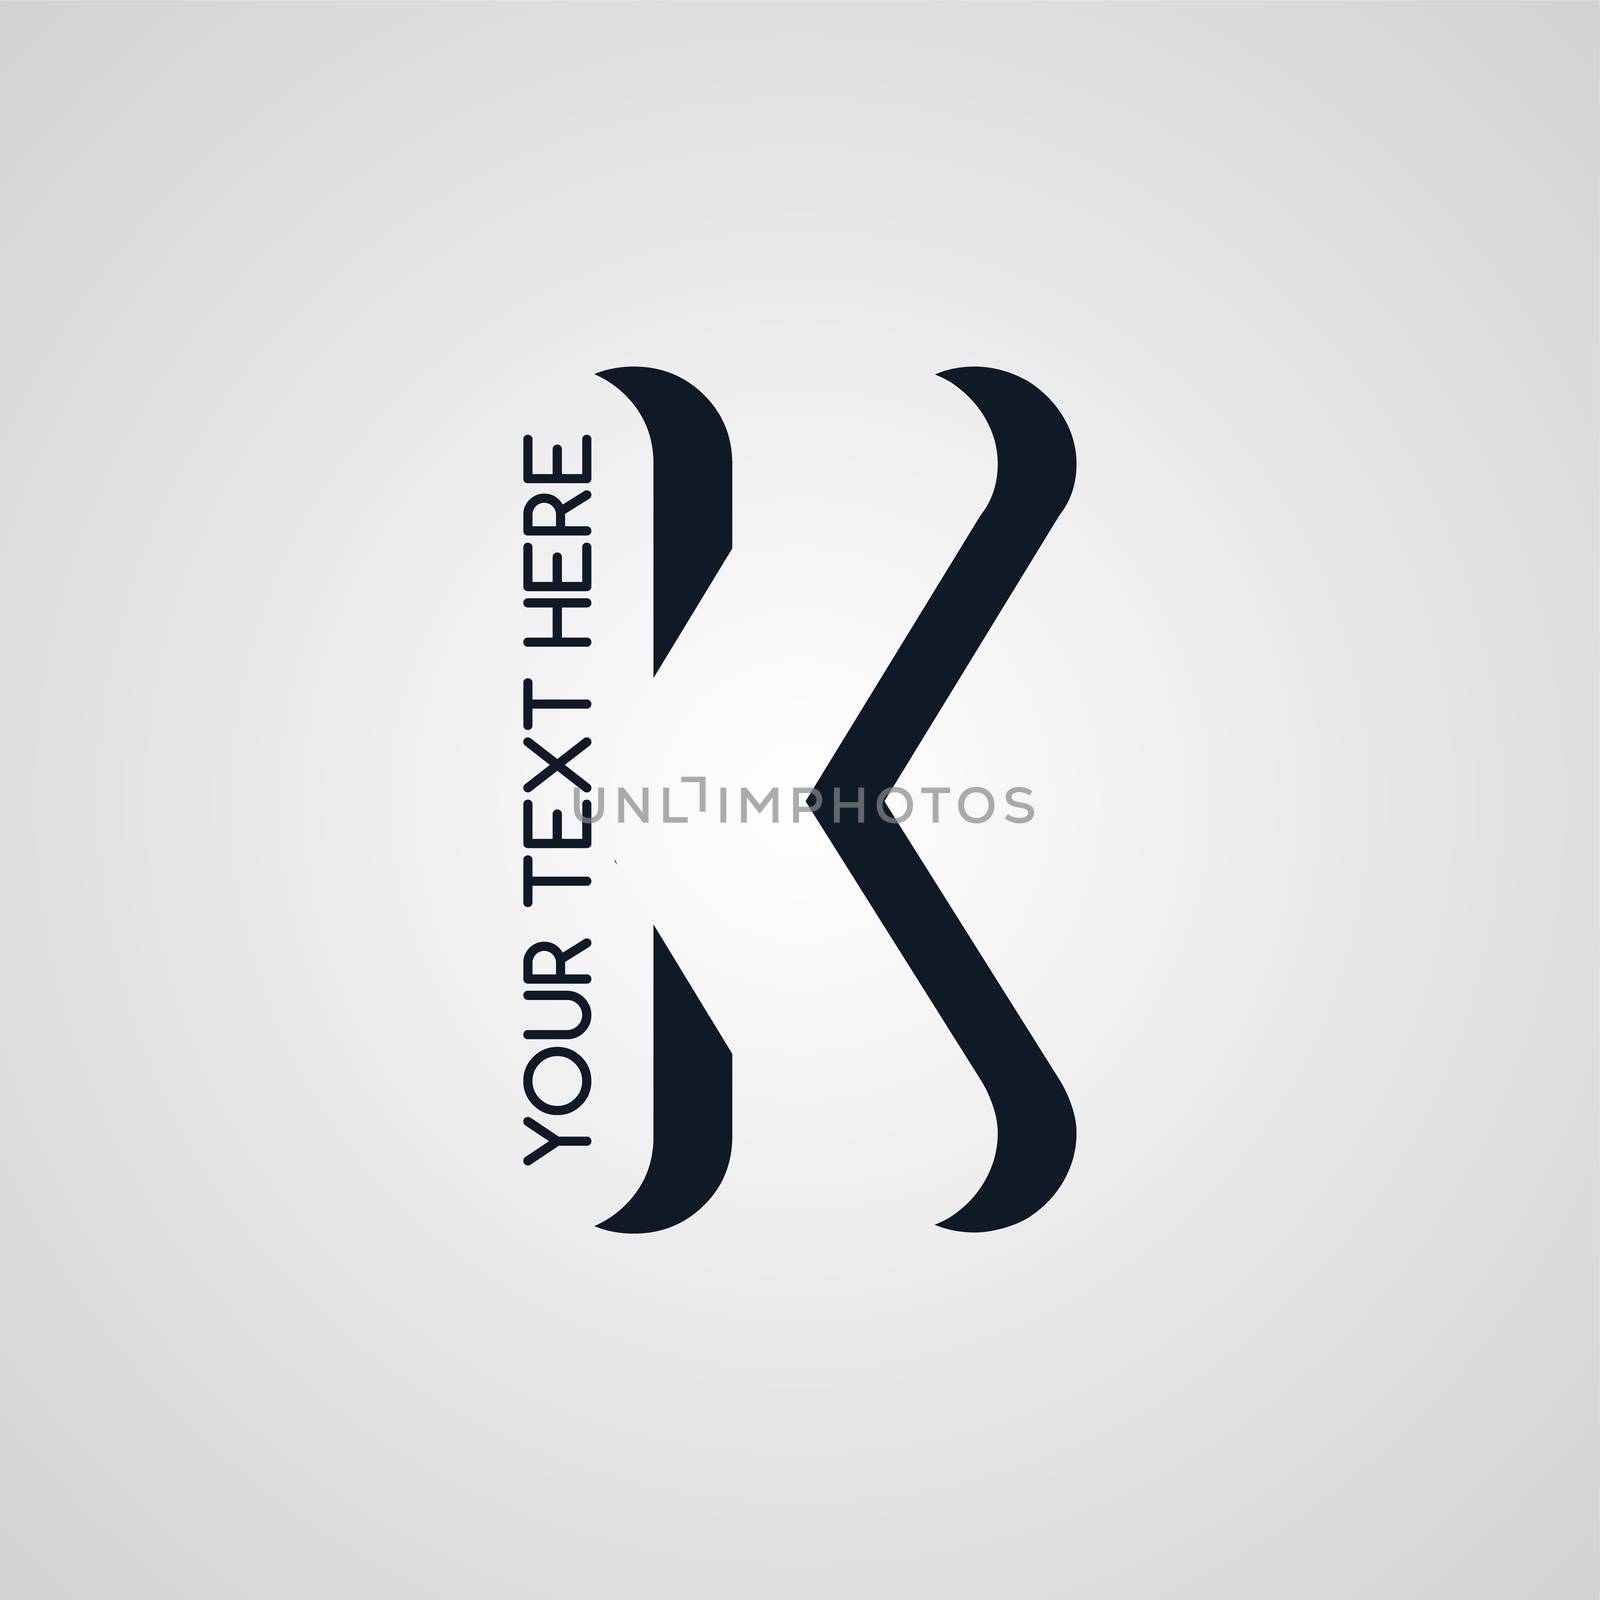 single letter theme logotype vector art illustration